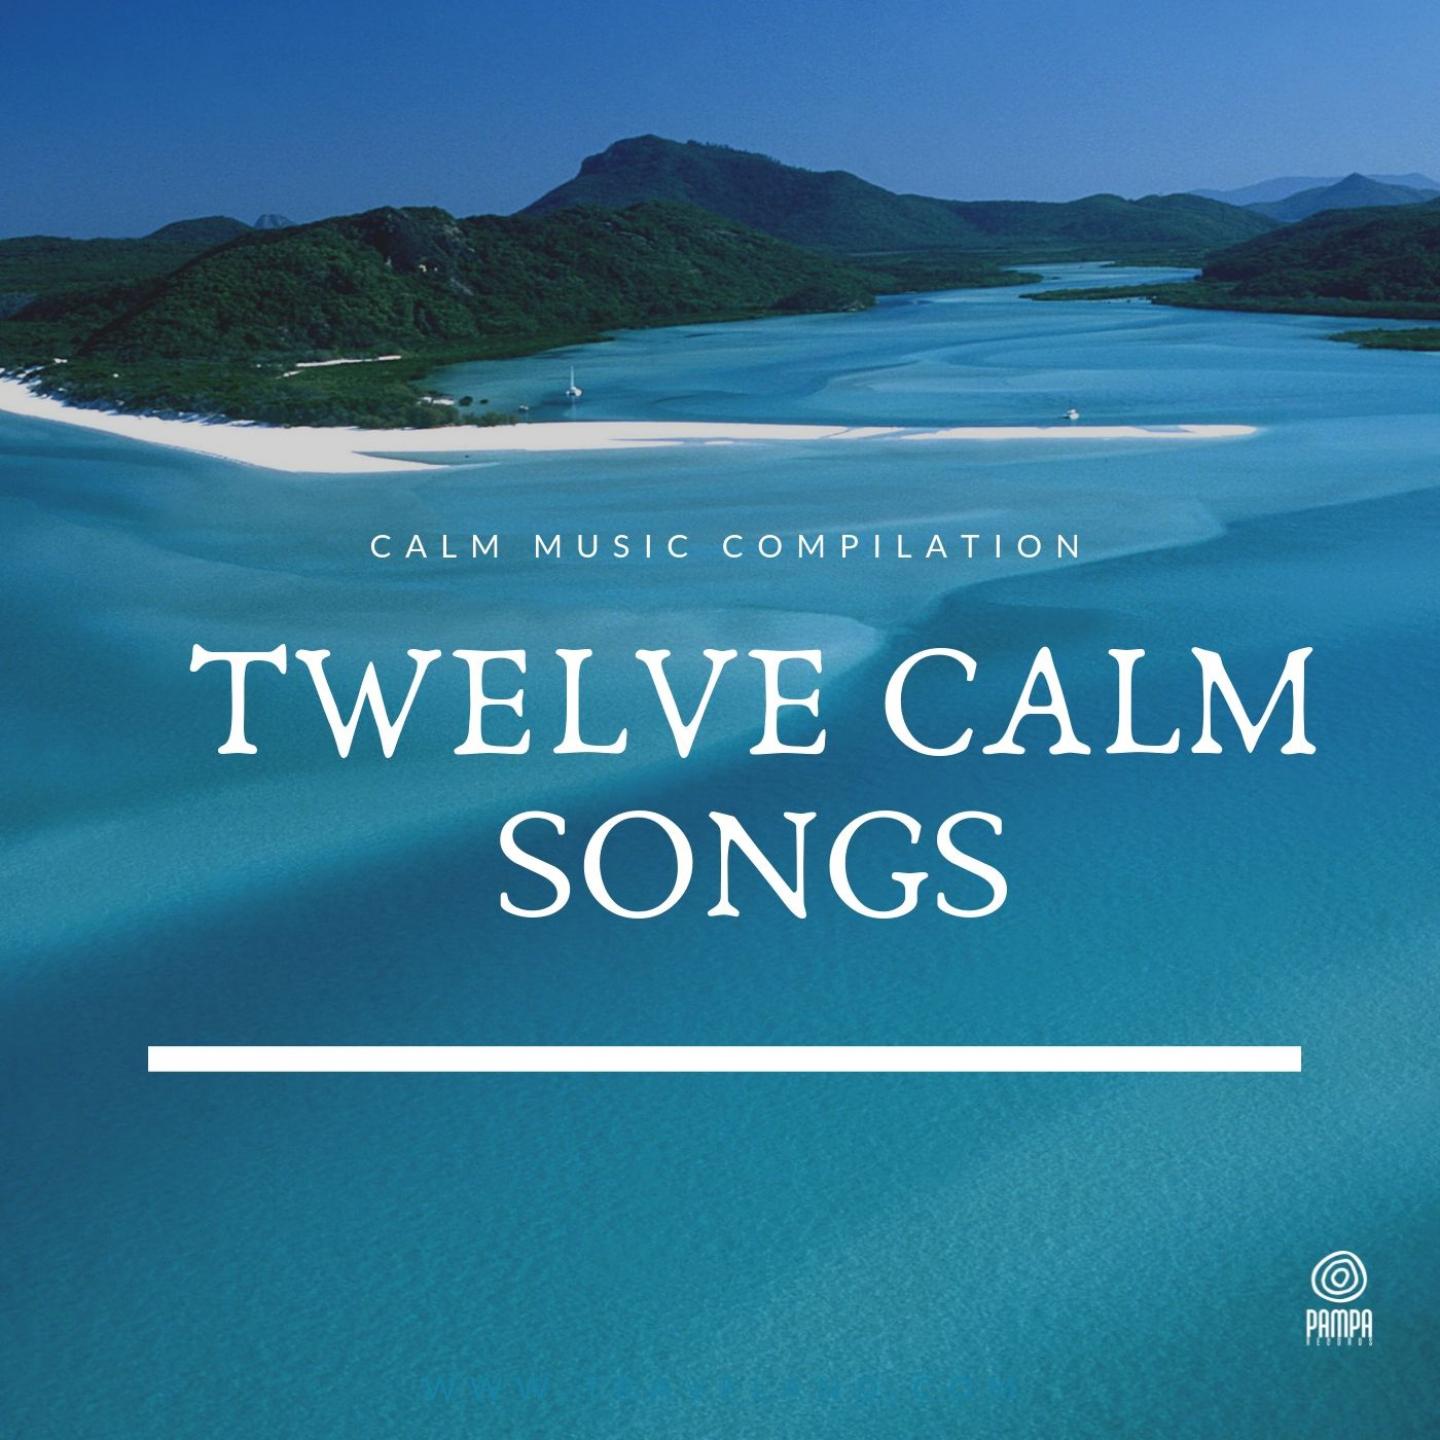 Twelves Calm Songs (Calm Music Compilation)